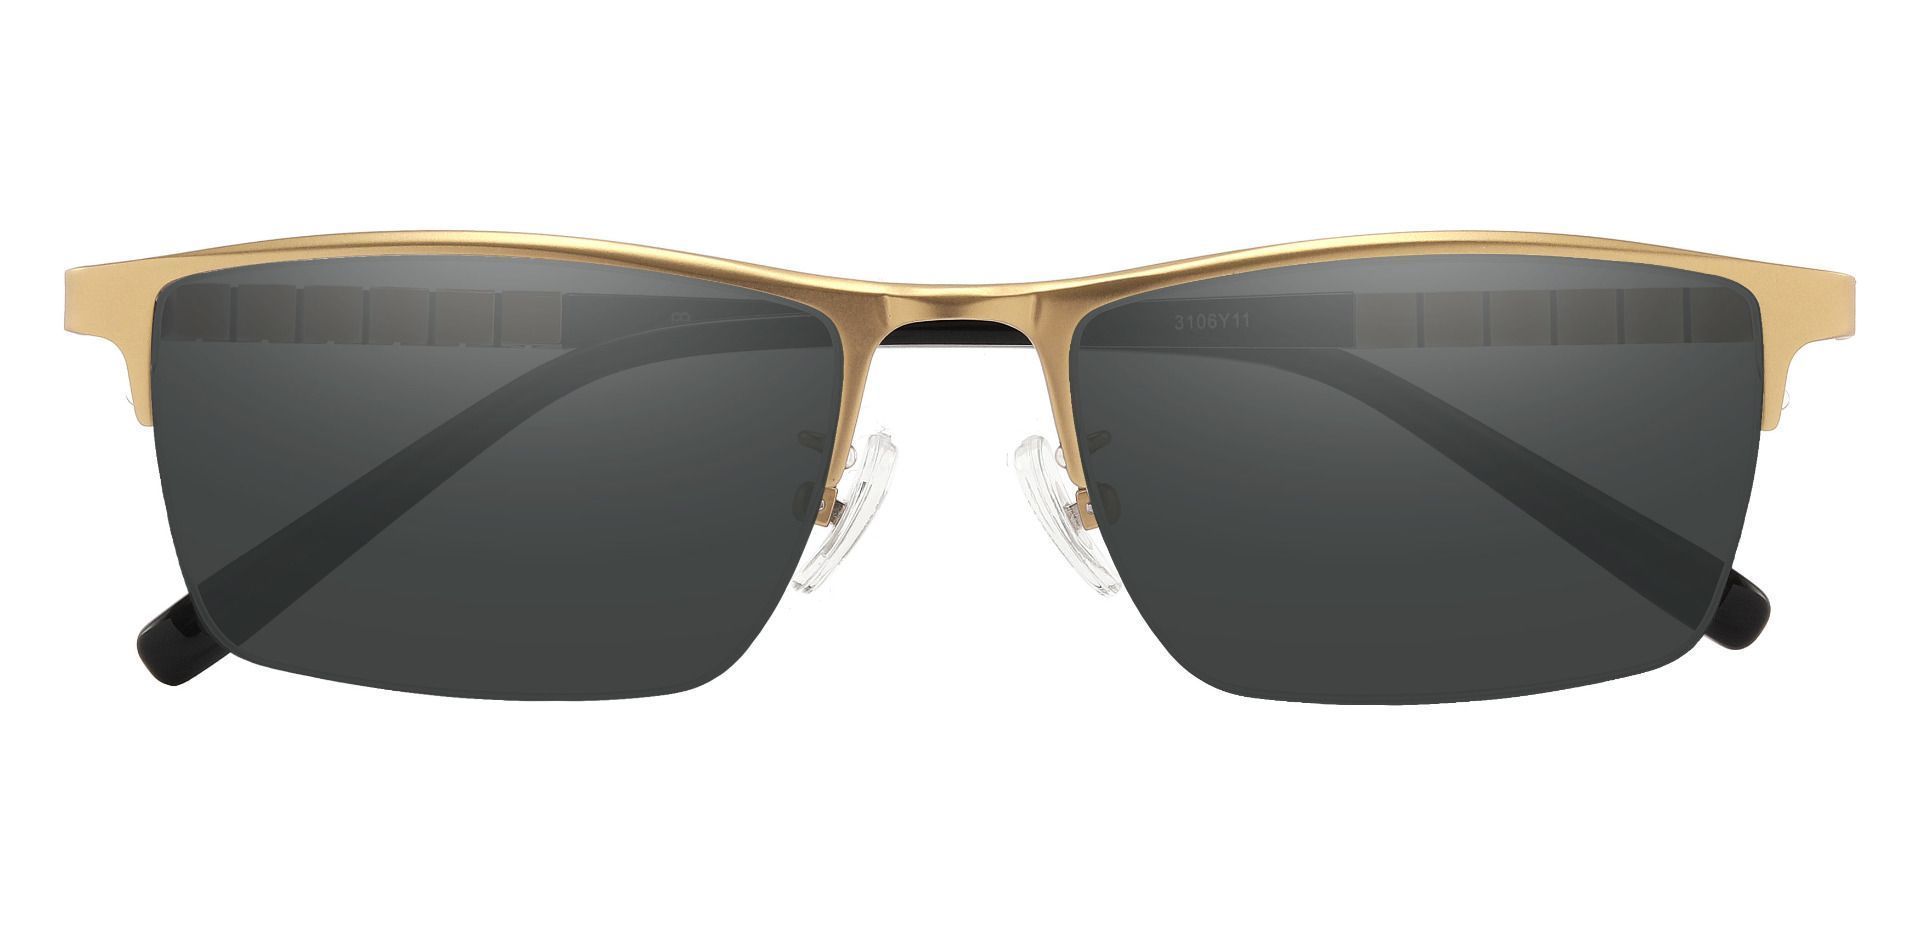 Maine Rectangle Prescription Sunglasses - Gold Frame With Gray Lenses